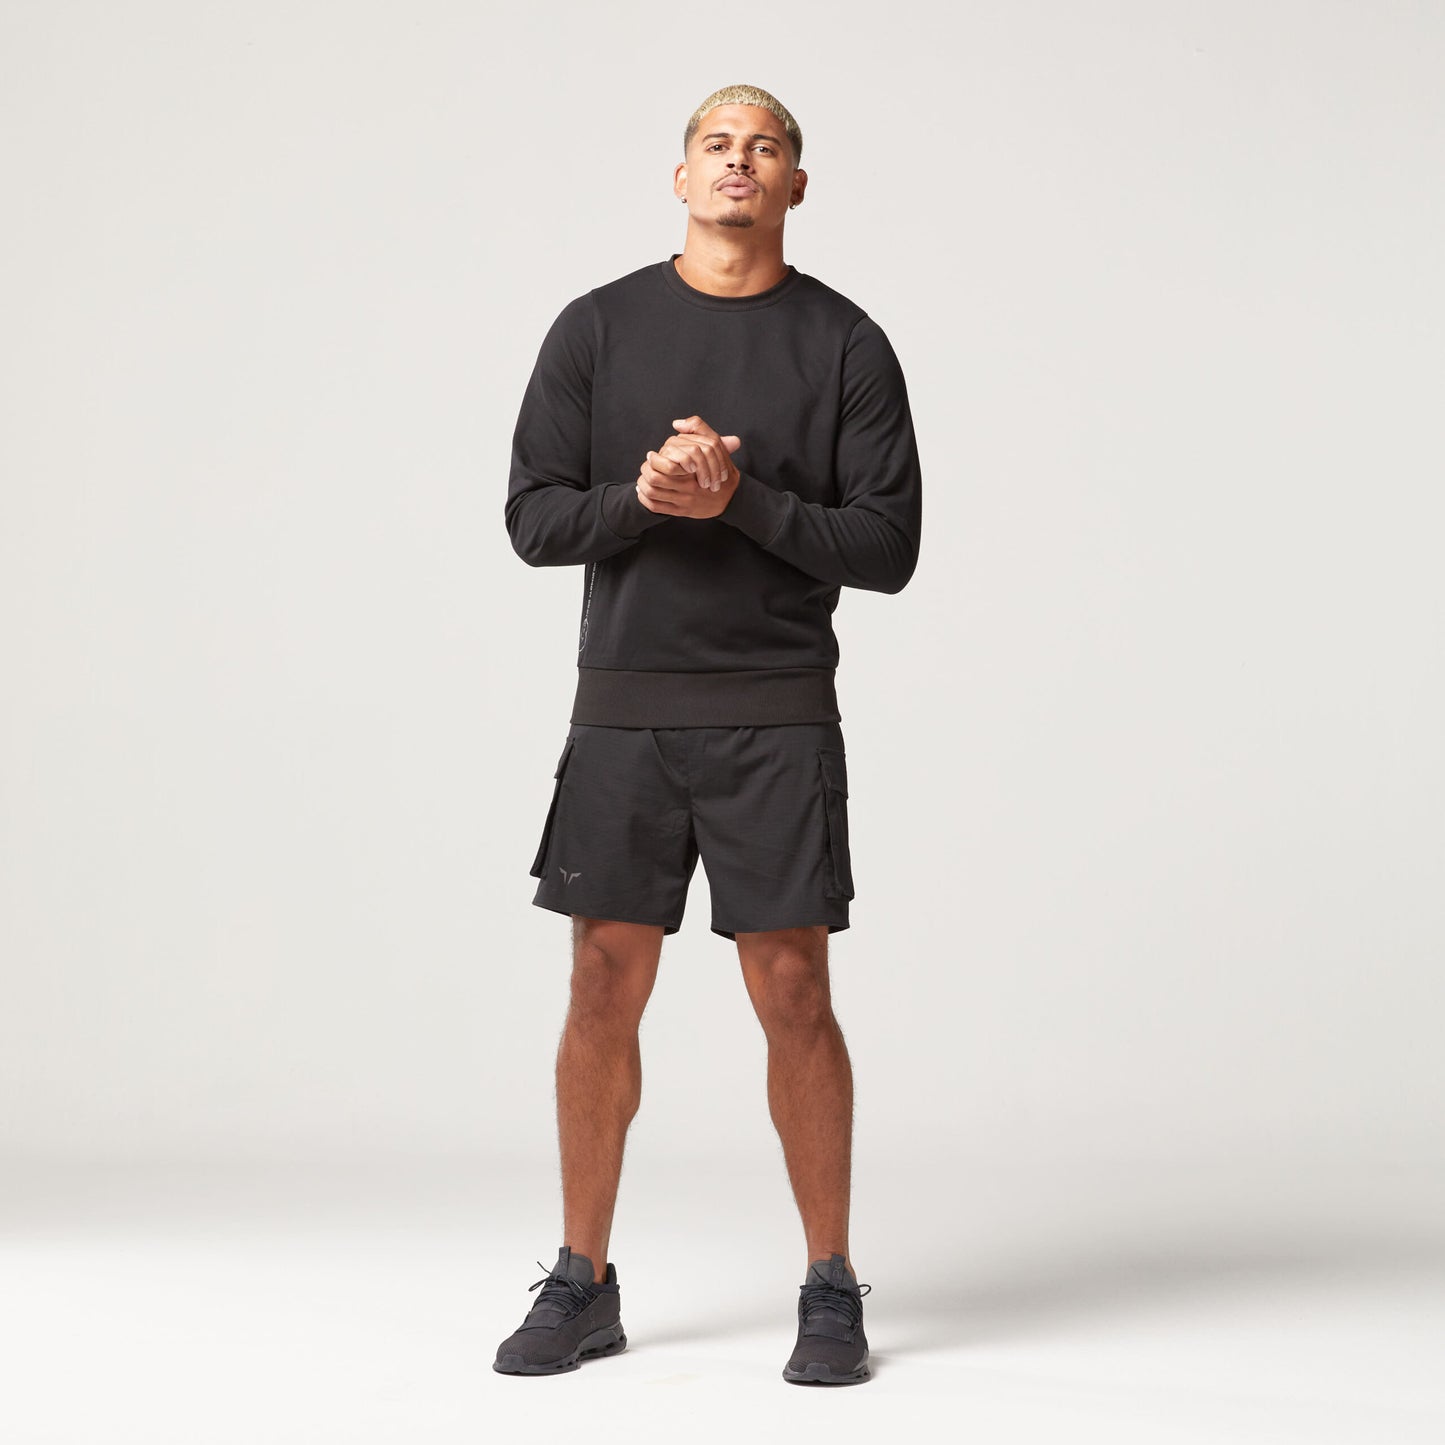 squatwolf-gym-wear-code-crew-sweatshirt-black-workout-shirts-for-men